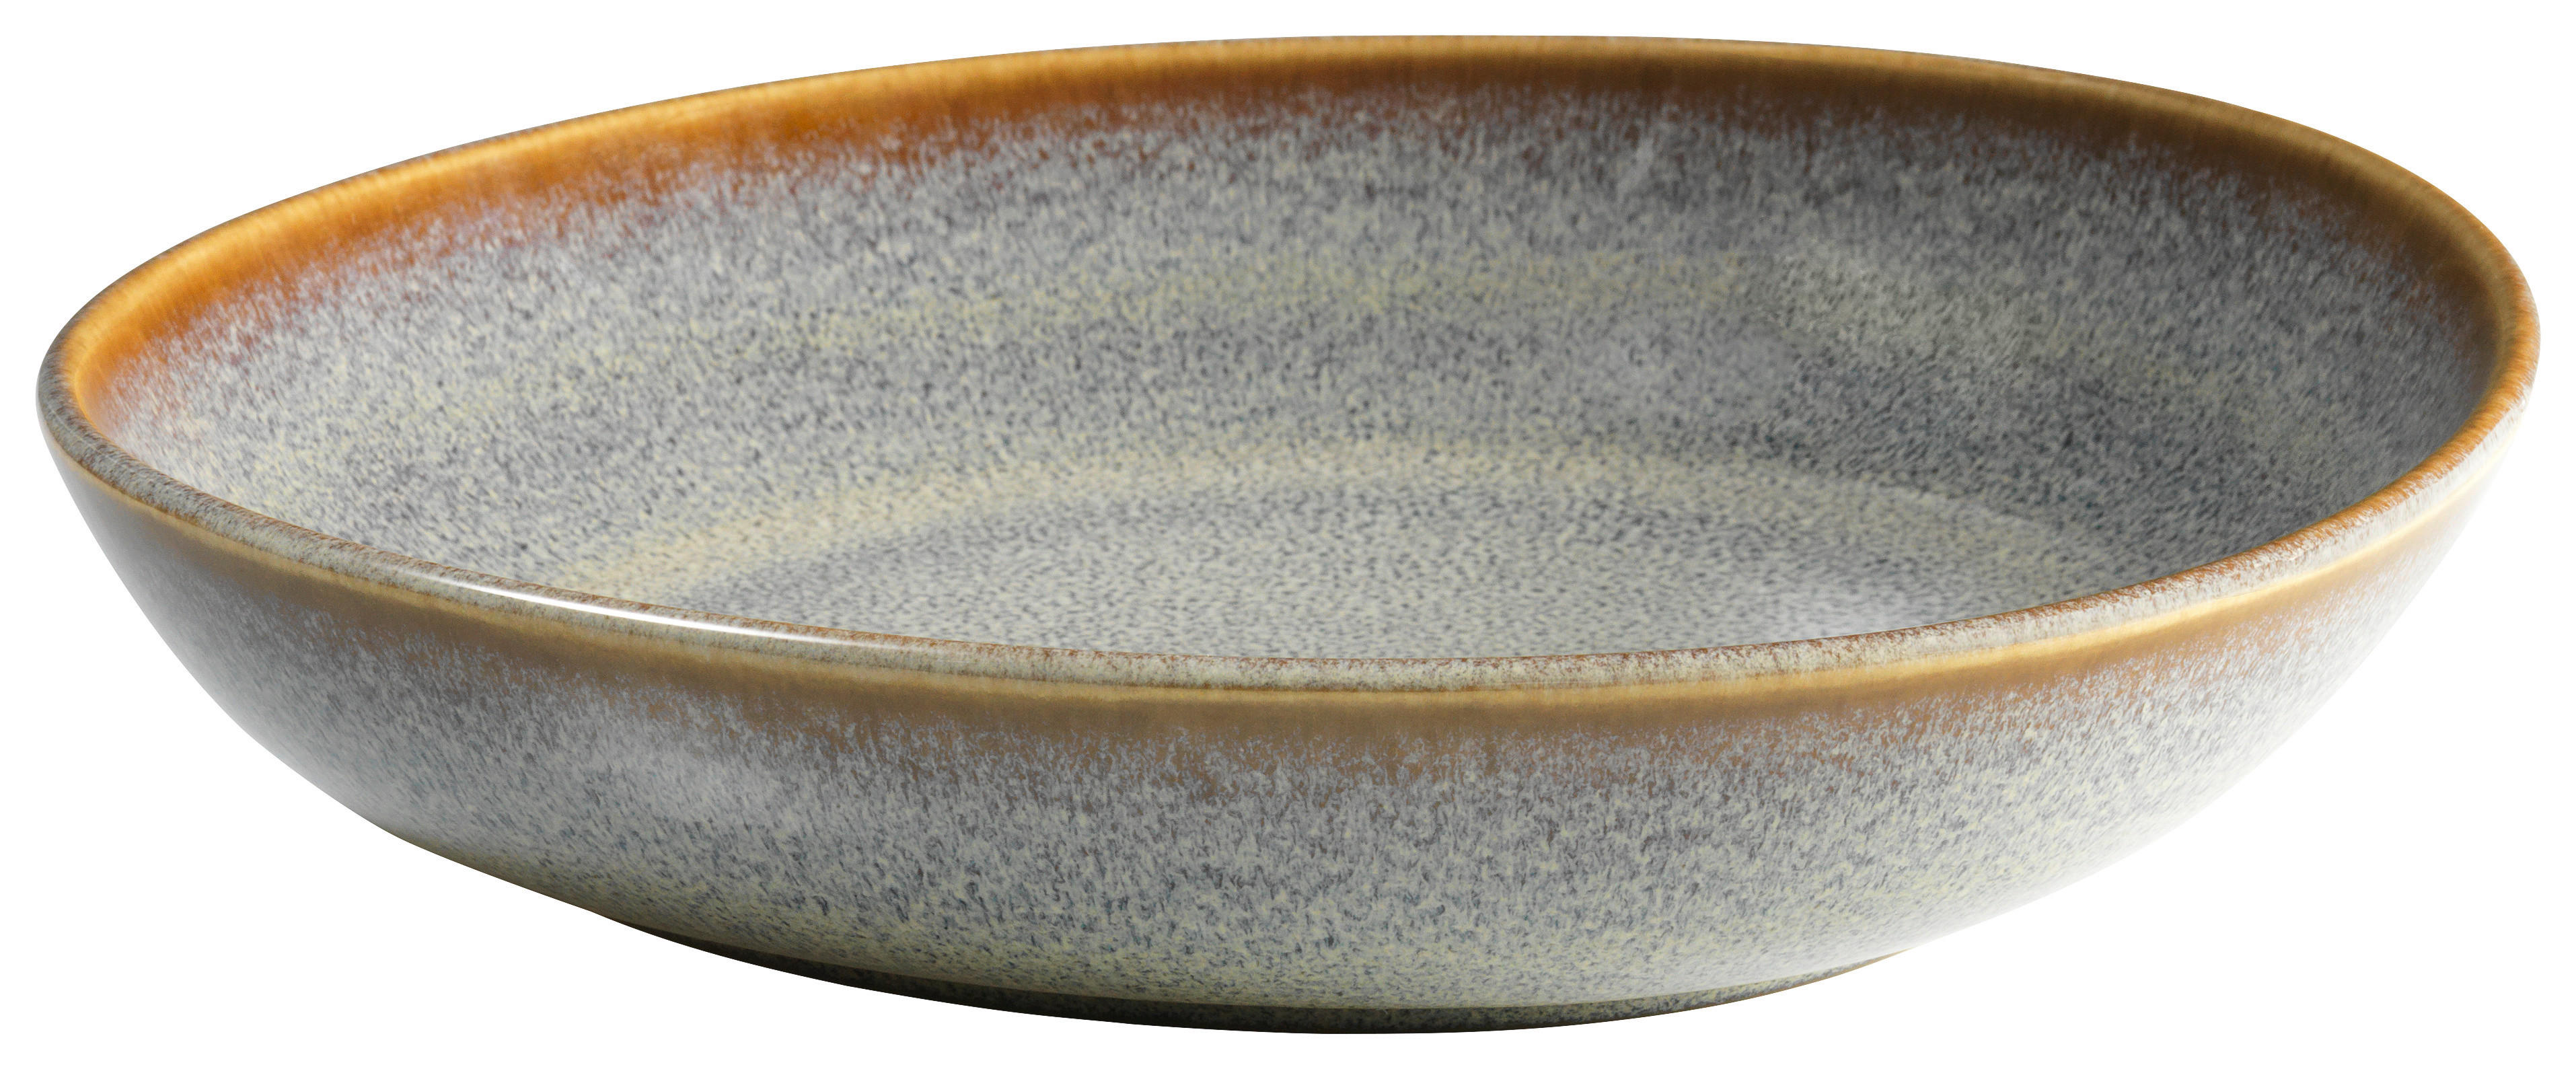 SCHALE Lave Beige 22 cm   - Beige, LIFESTYLE, Keramik (22cm) - like.Villeroy & Boch